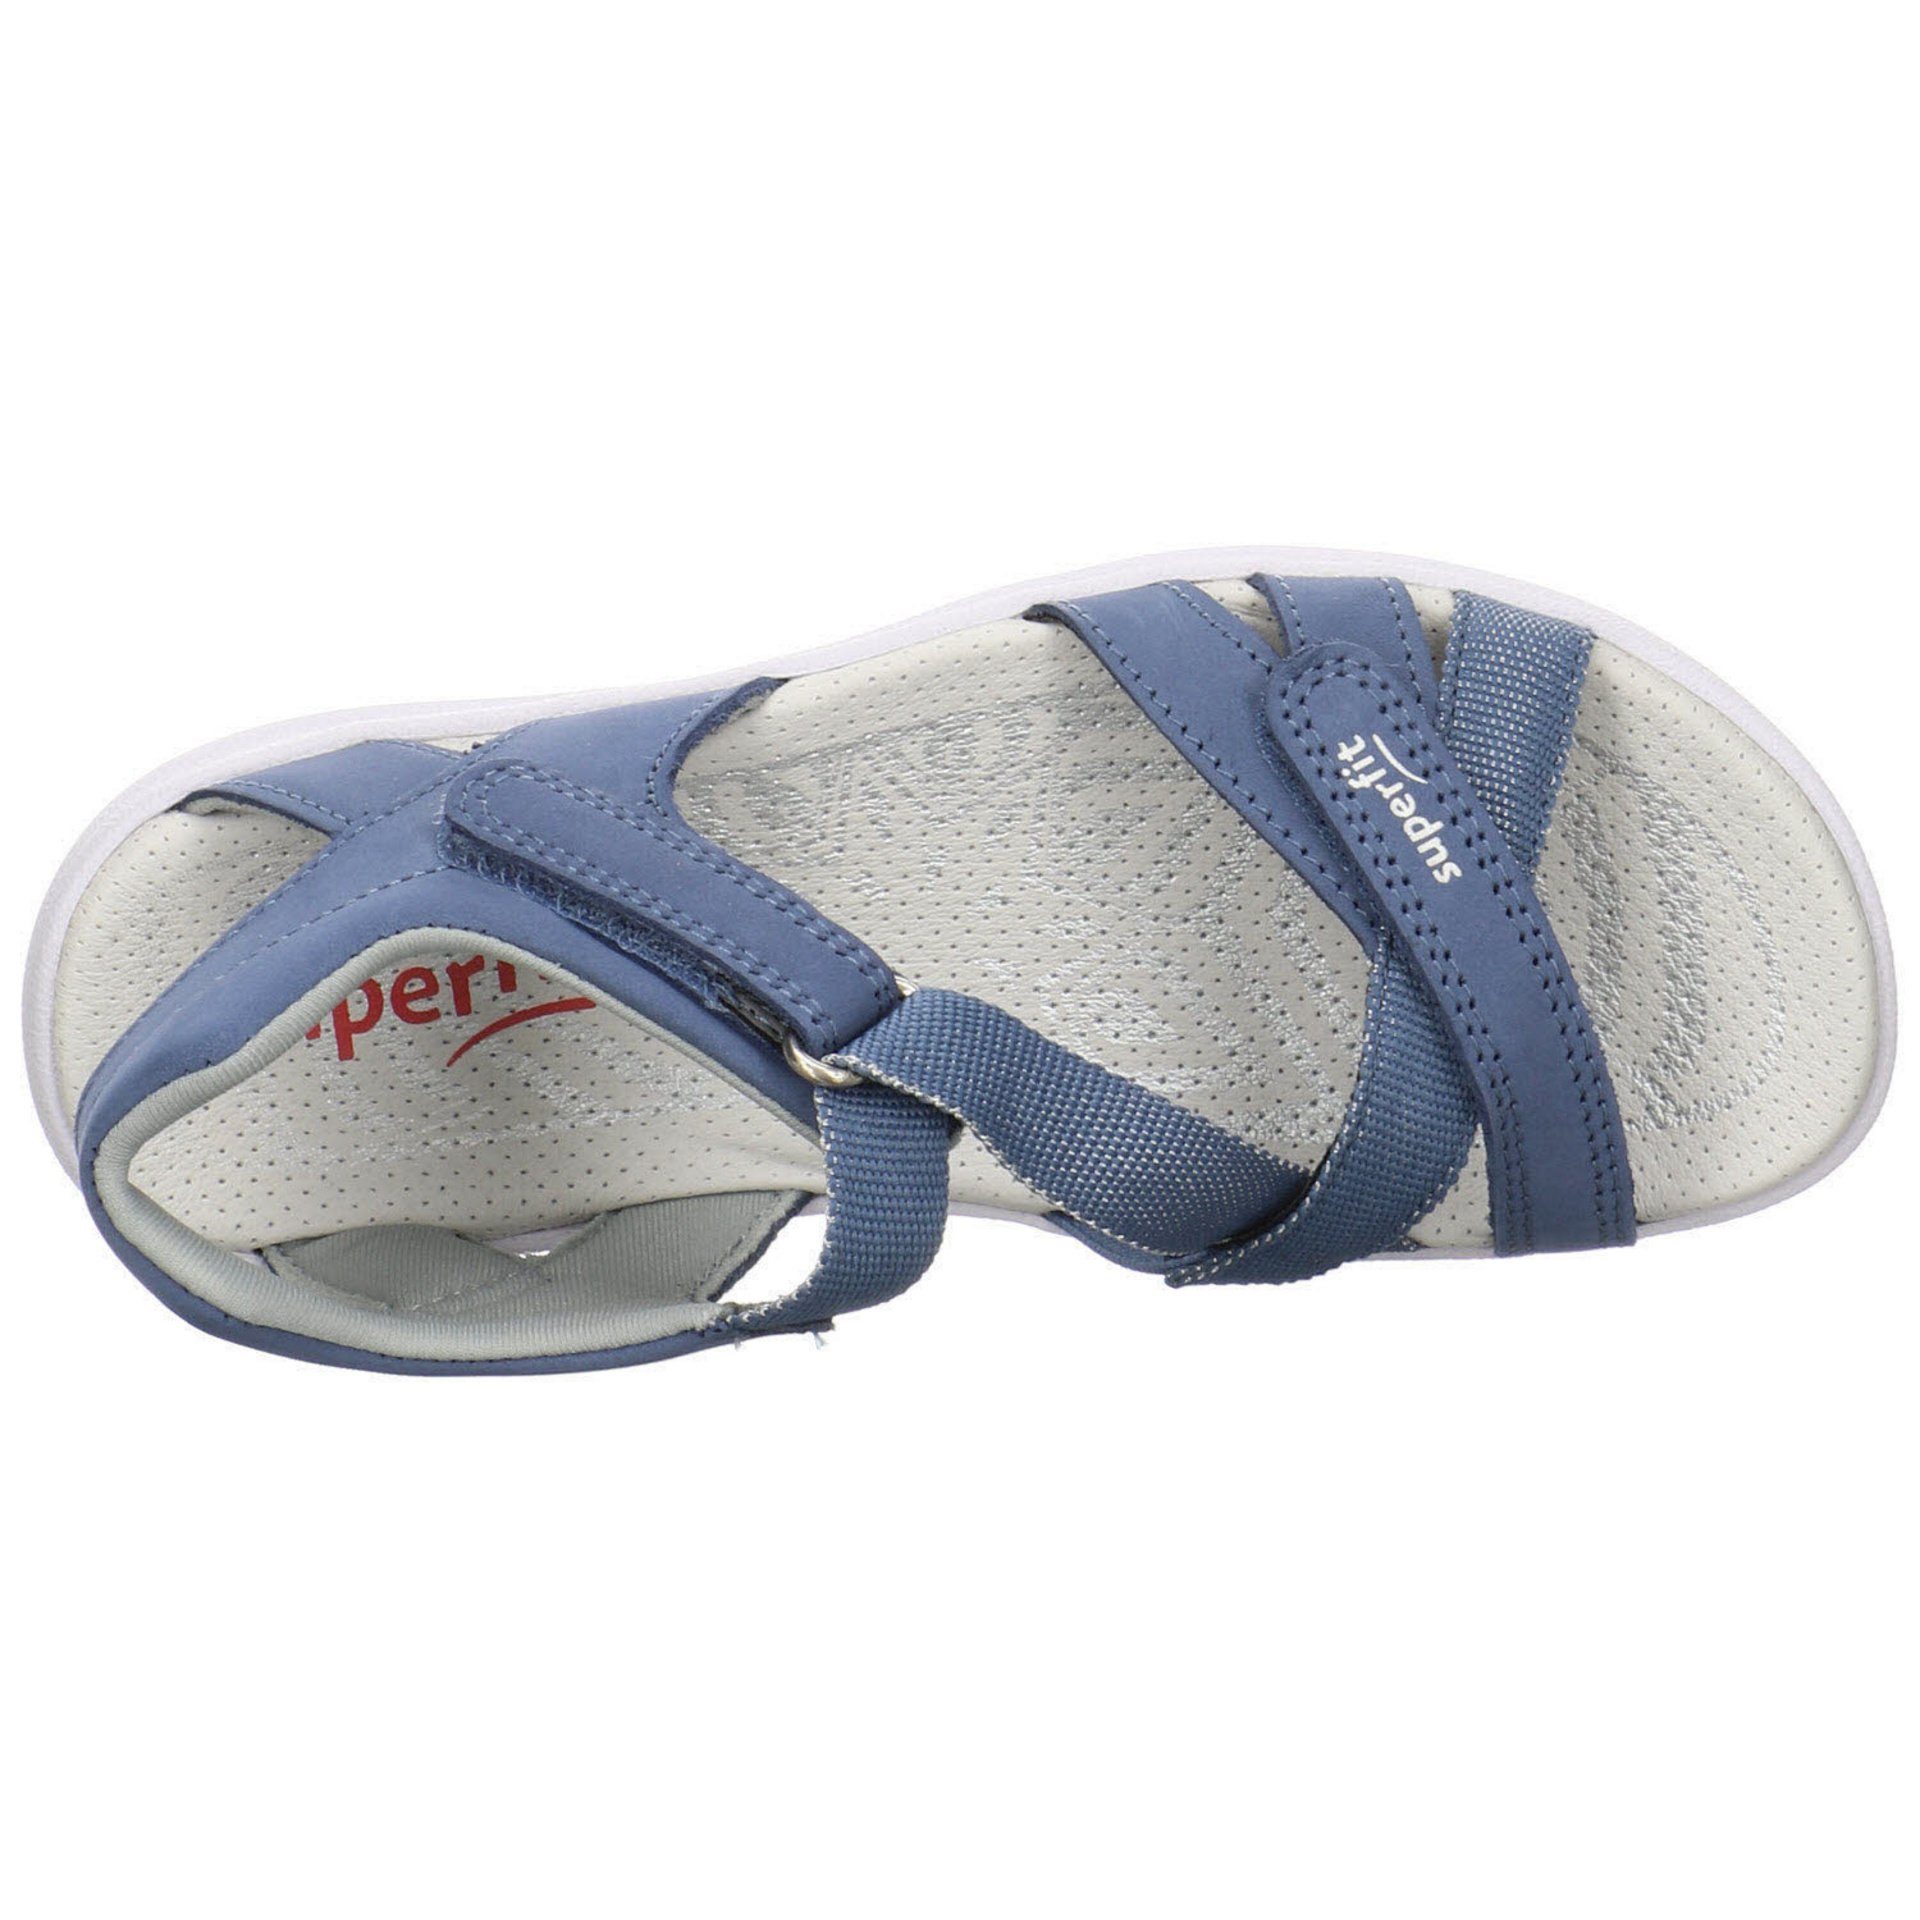 Legero Sandale Leder-/Textilkombination Schuhe mittel Sandalen Rainbow Sandale Mädchen Superfit blau